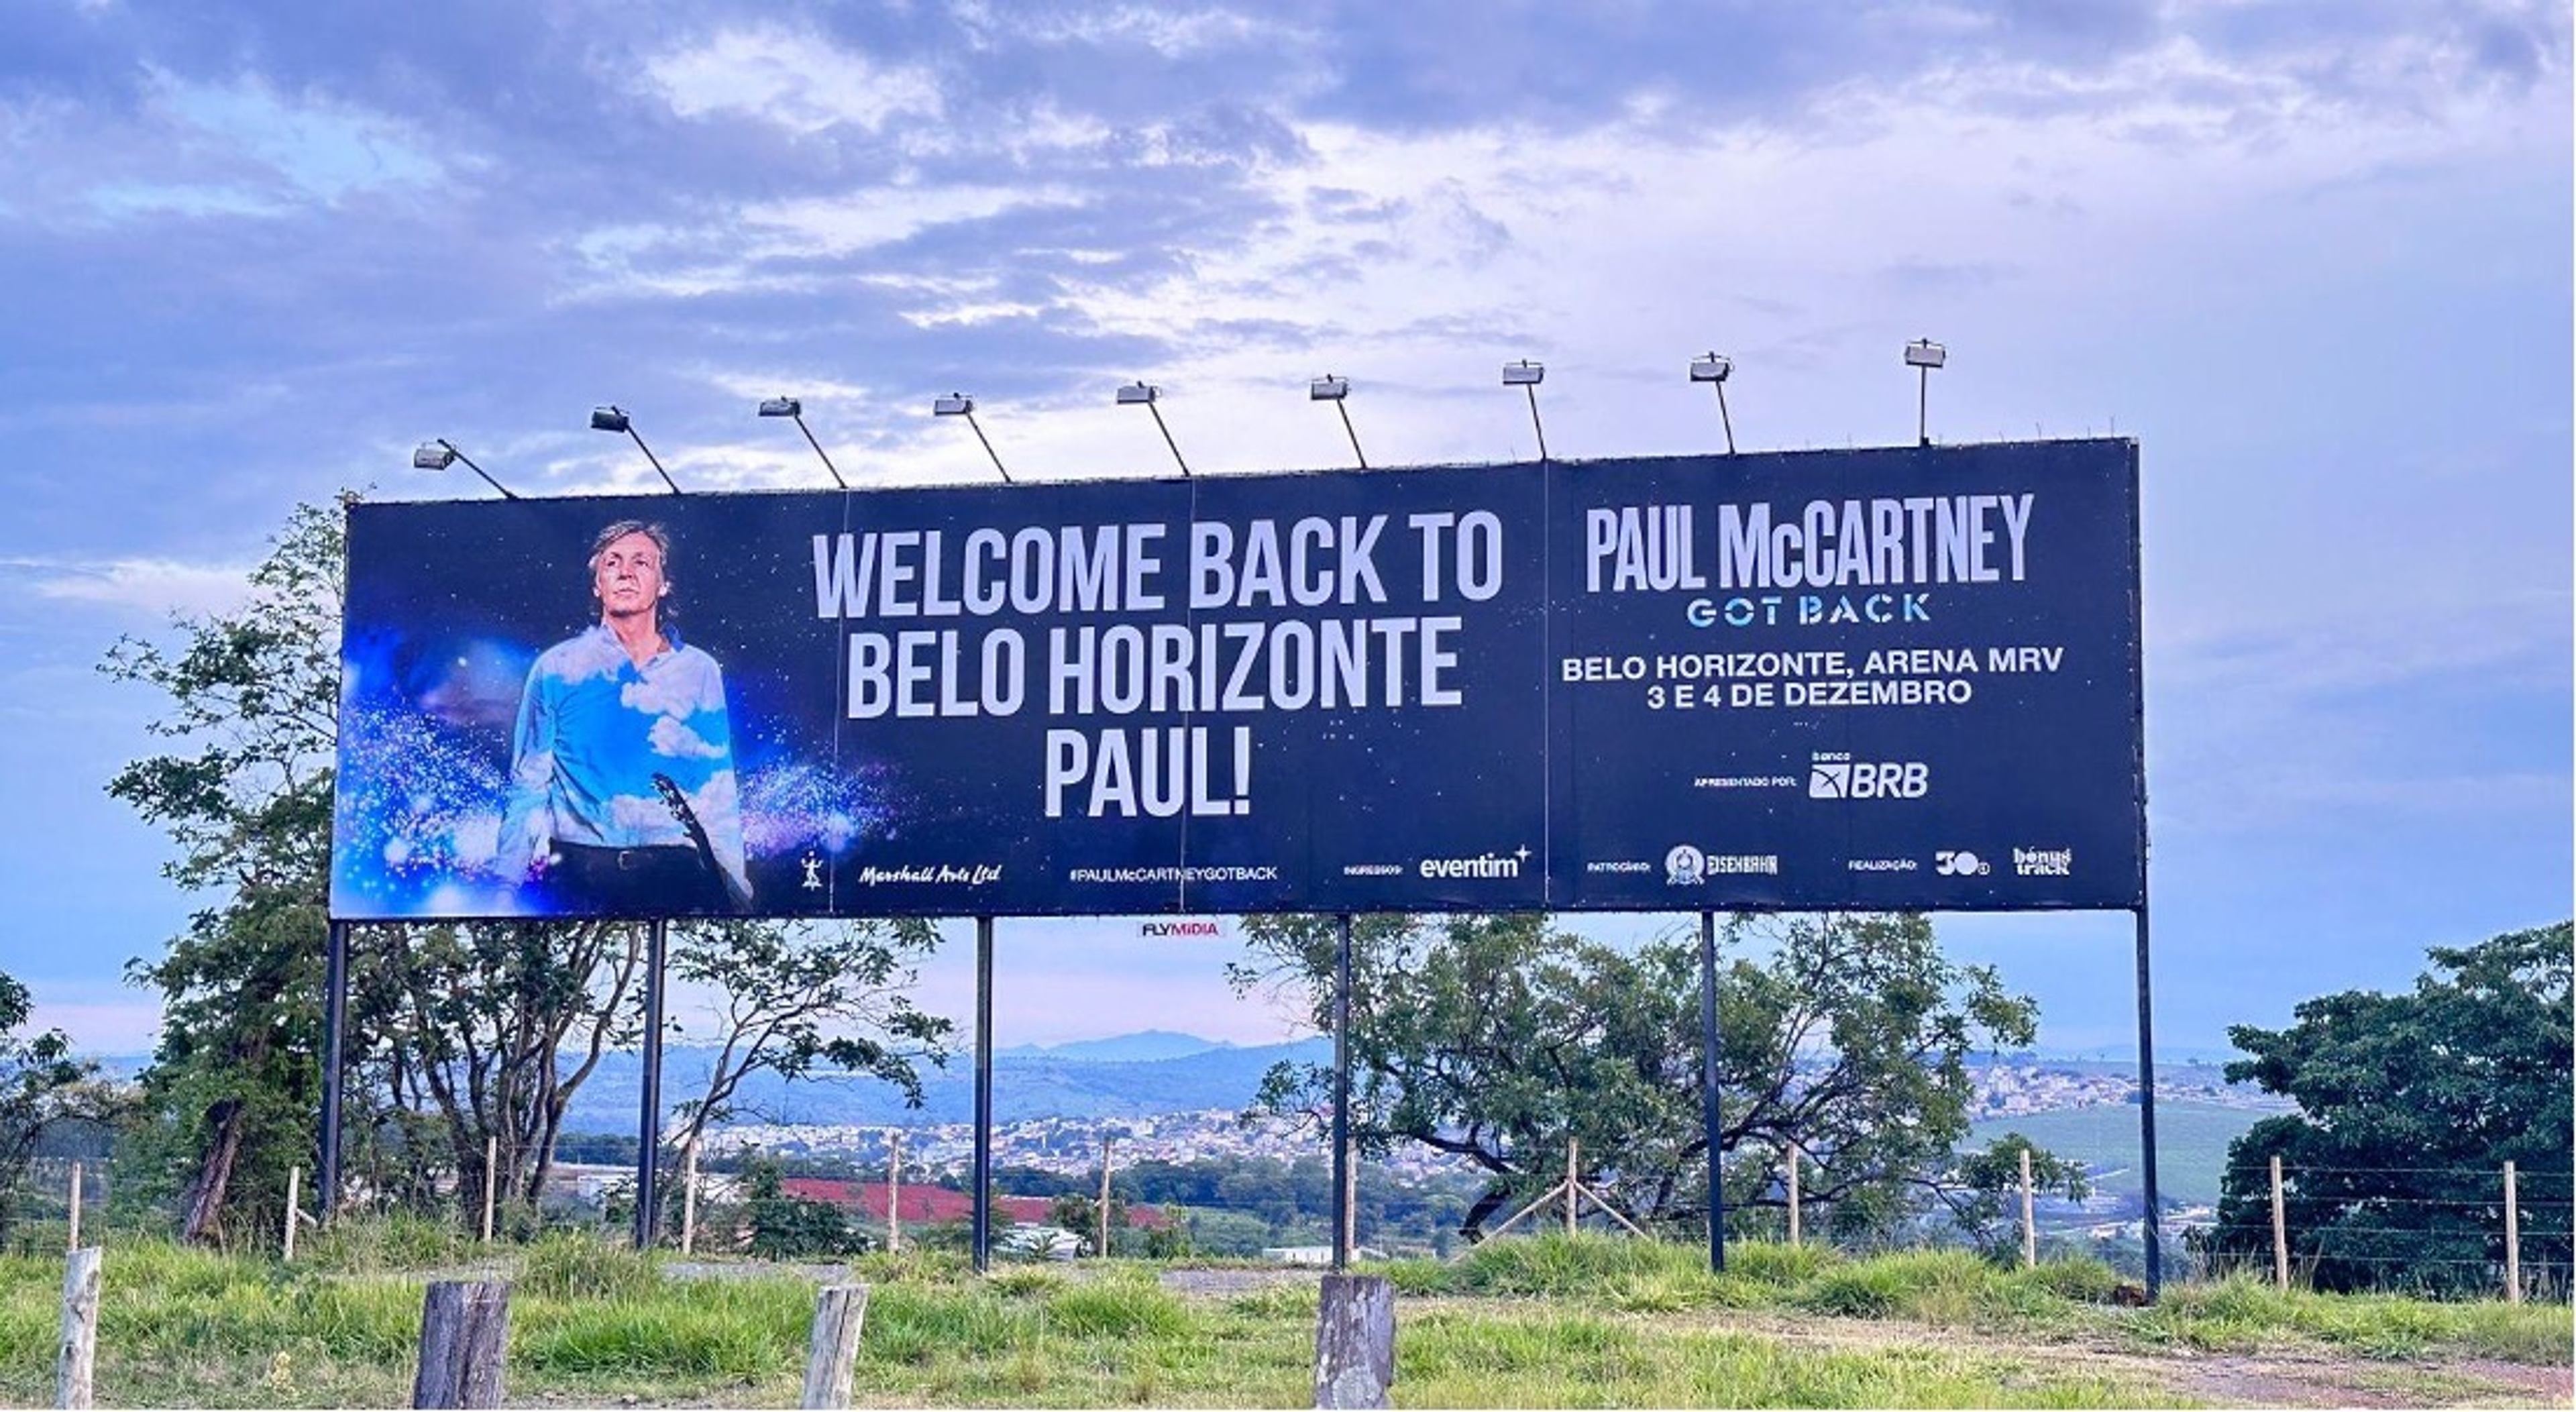 Sign in ⁠Belo Horizonte saying "Welcome back to ⁠Belo Horizonte Paul!"